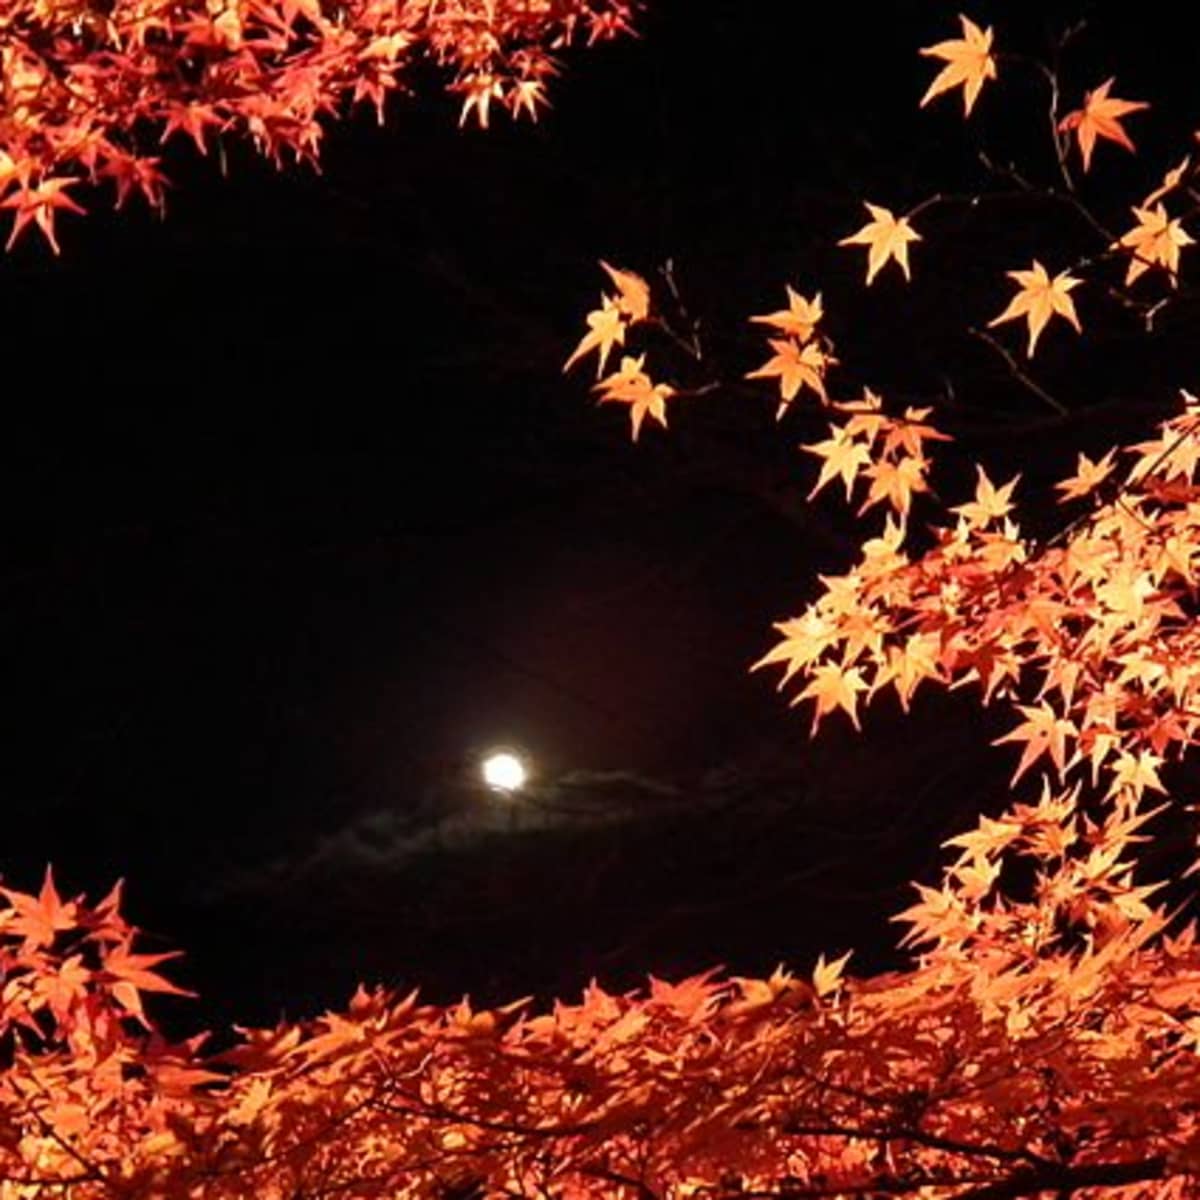 Kaede The Japanese Maple Tree Dengarden Home And Garden